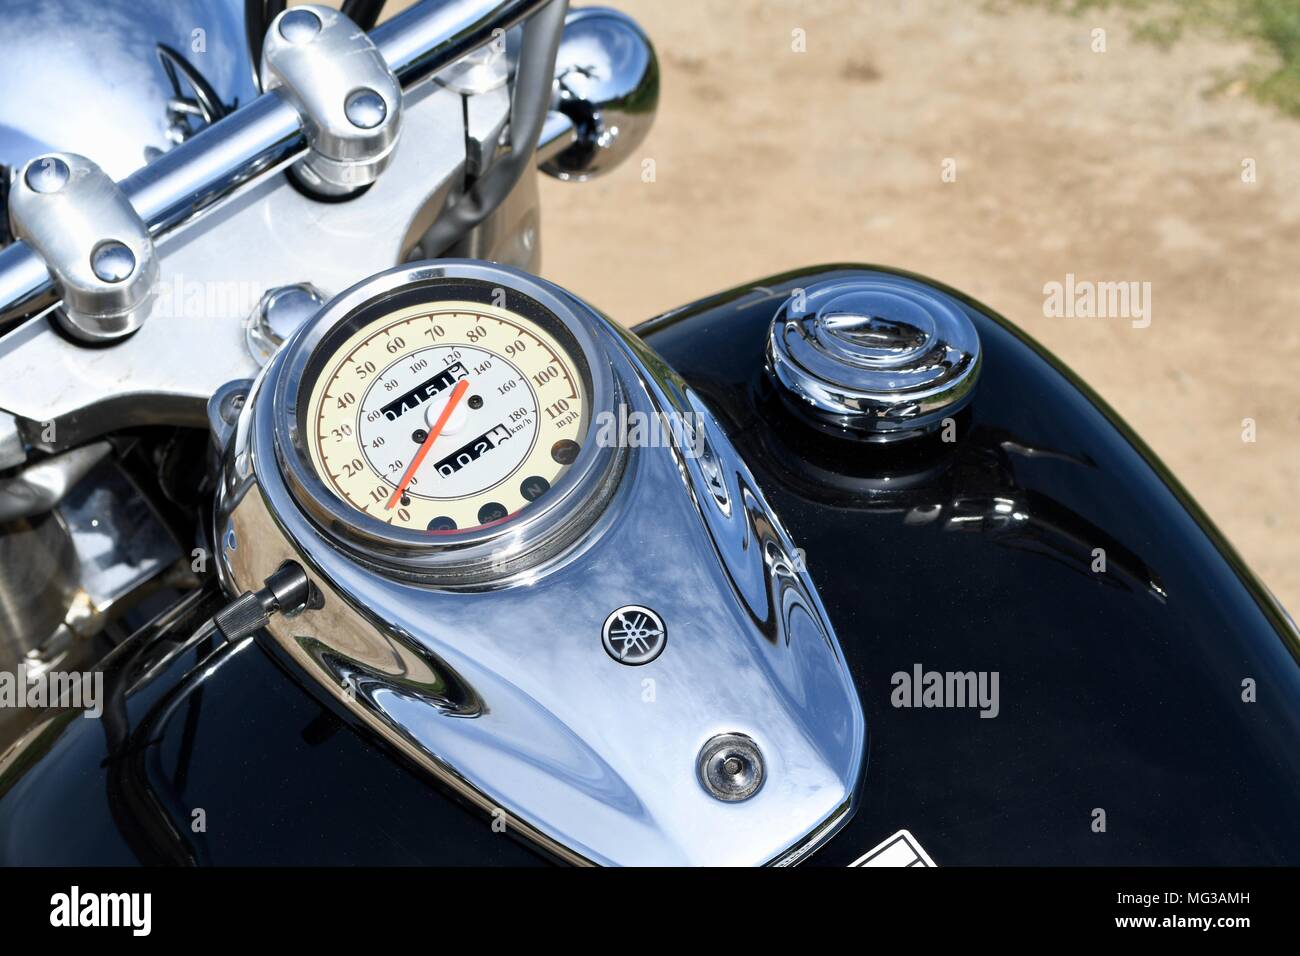 Yamaha Dragstar Classic motorbike Stock Photo